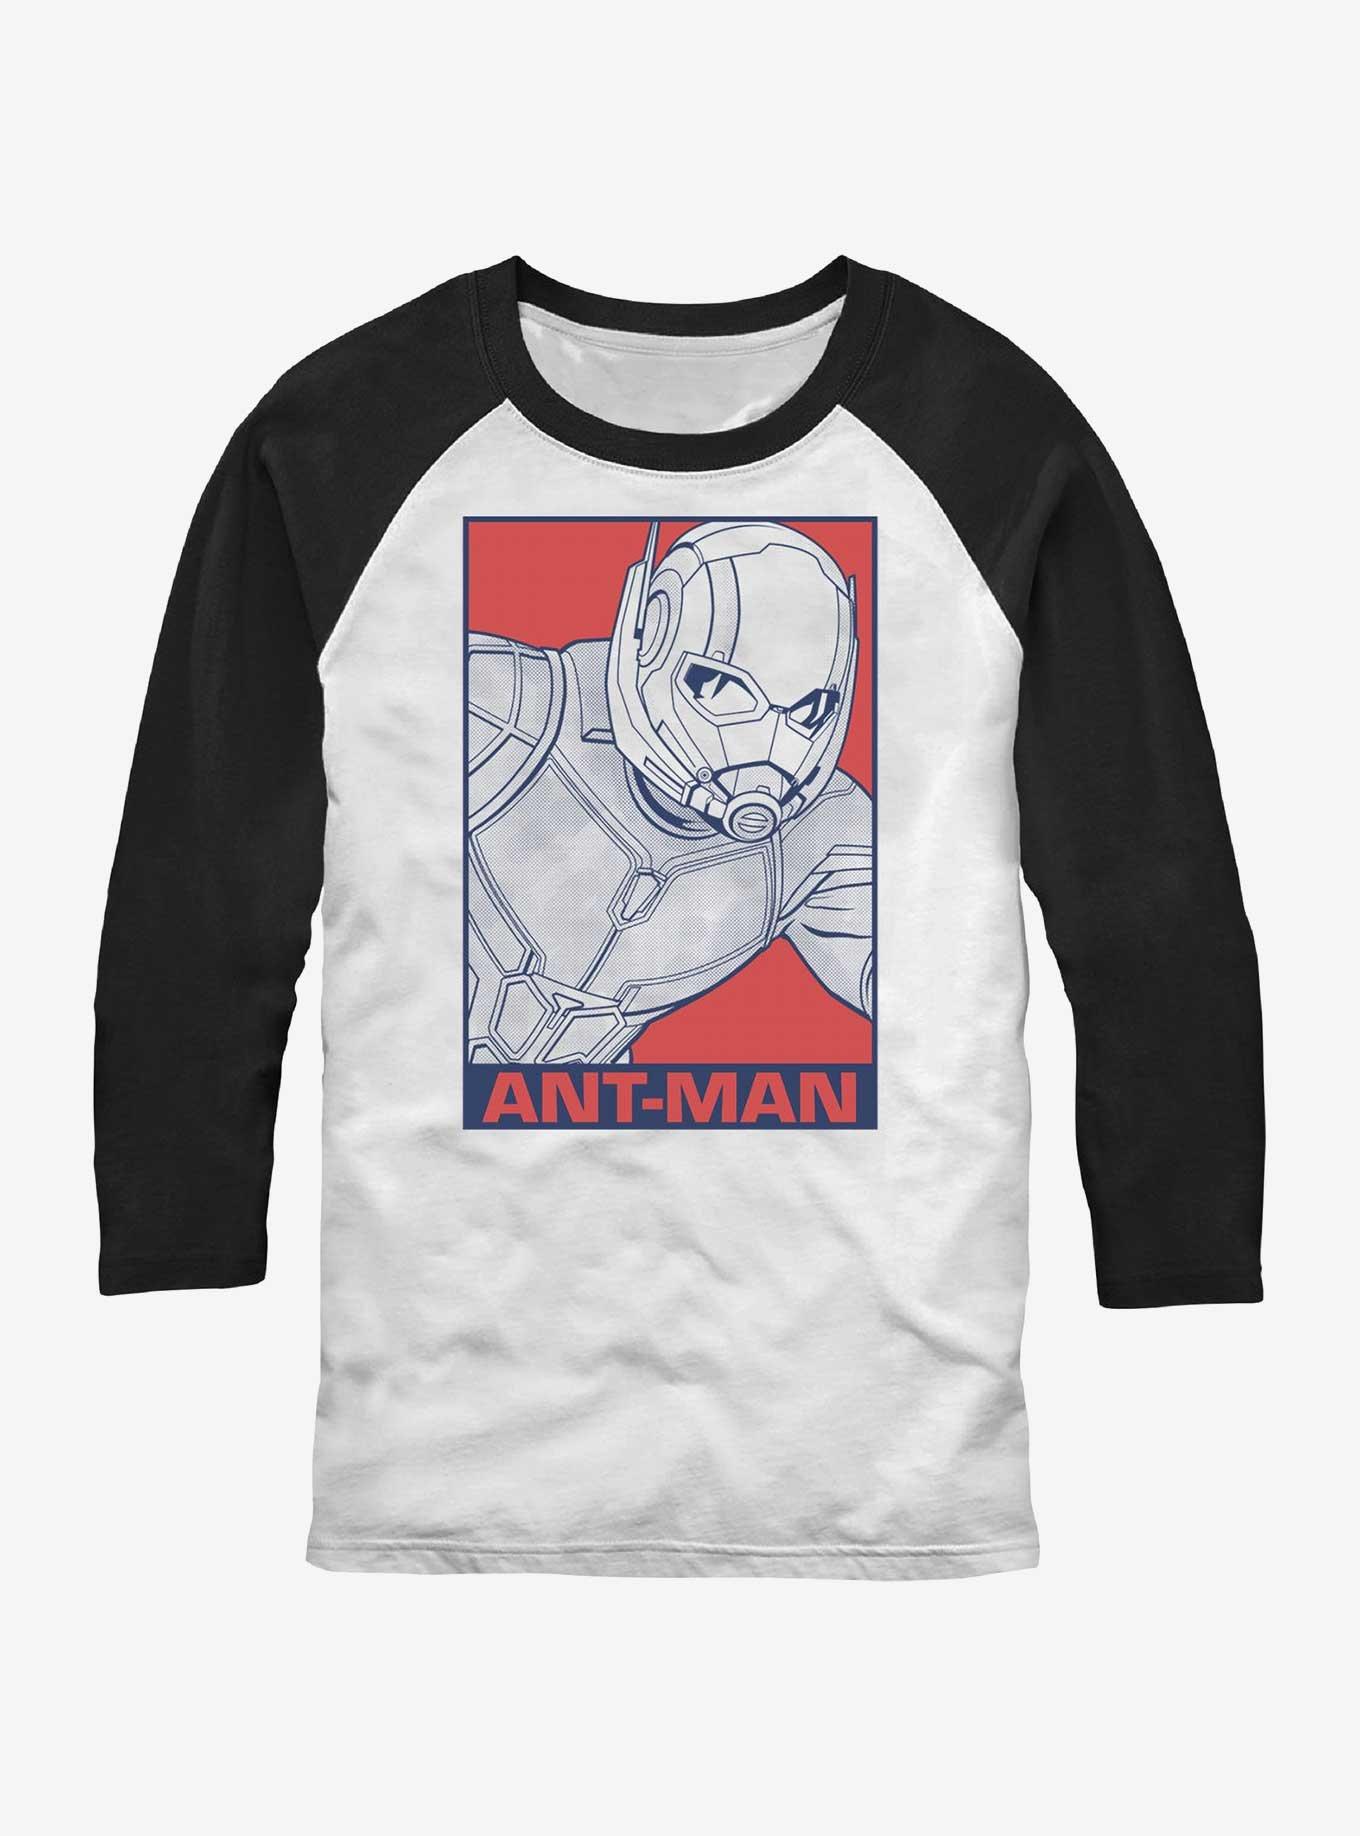 Marvel Ant-Man Pop Art Poster Raglan T-Shirt